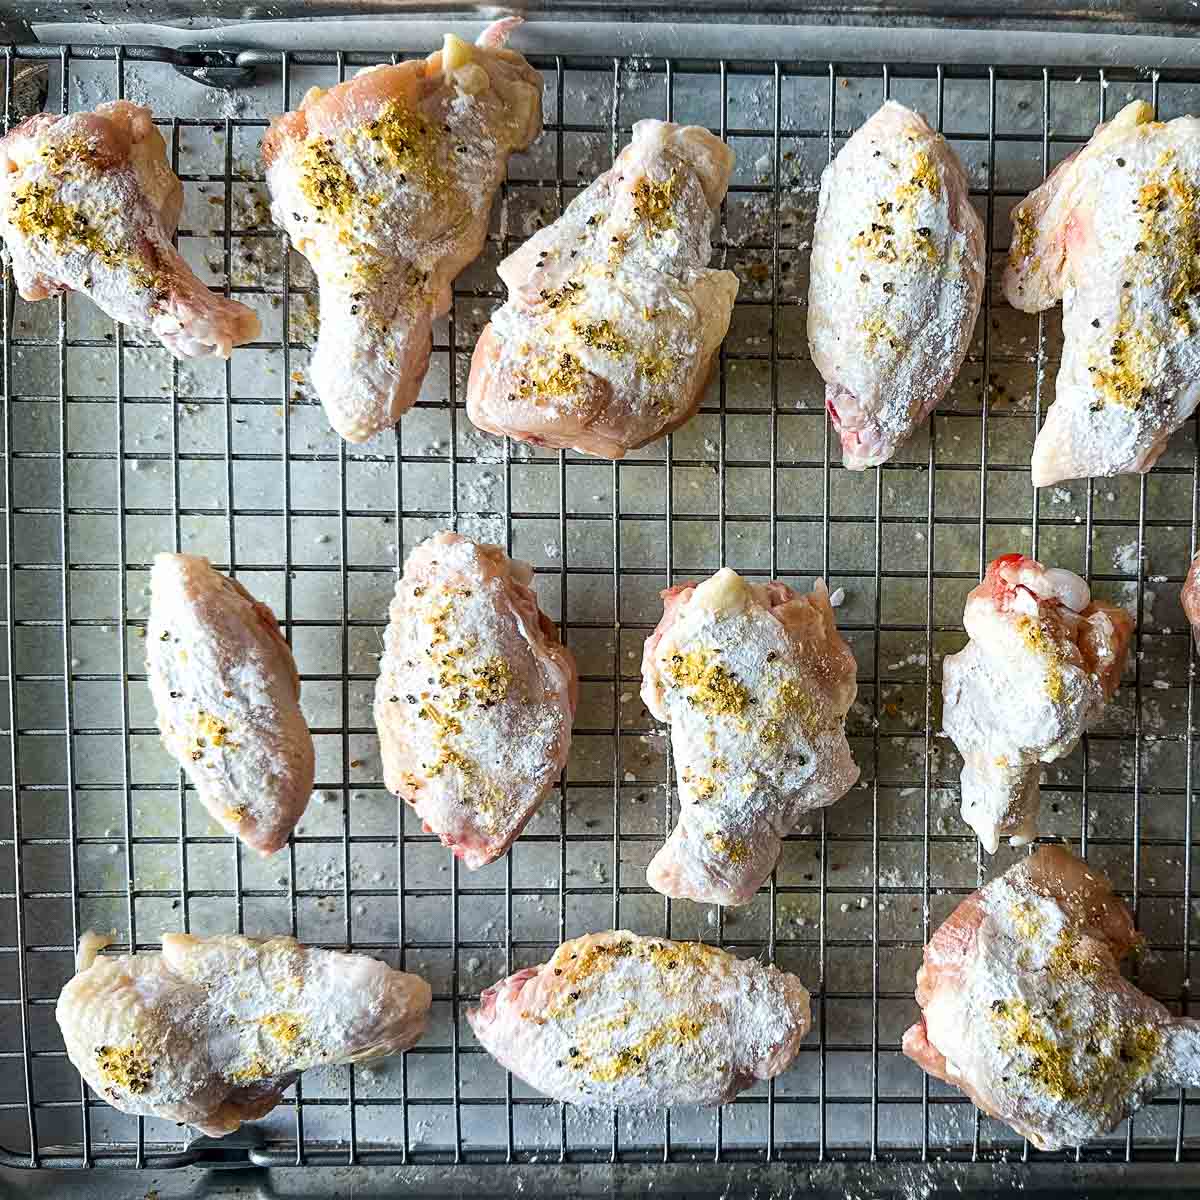 Chicken wings tossed in lemon pepper, lemon zest, and baking powder on a wire rack.